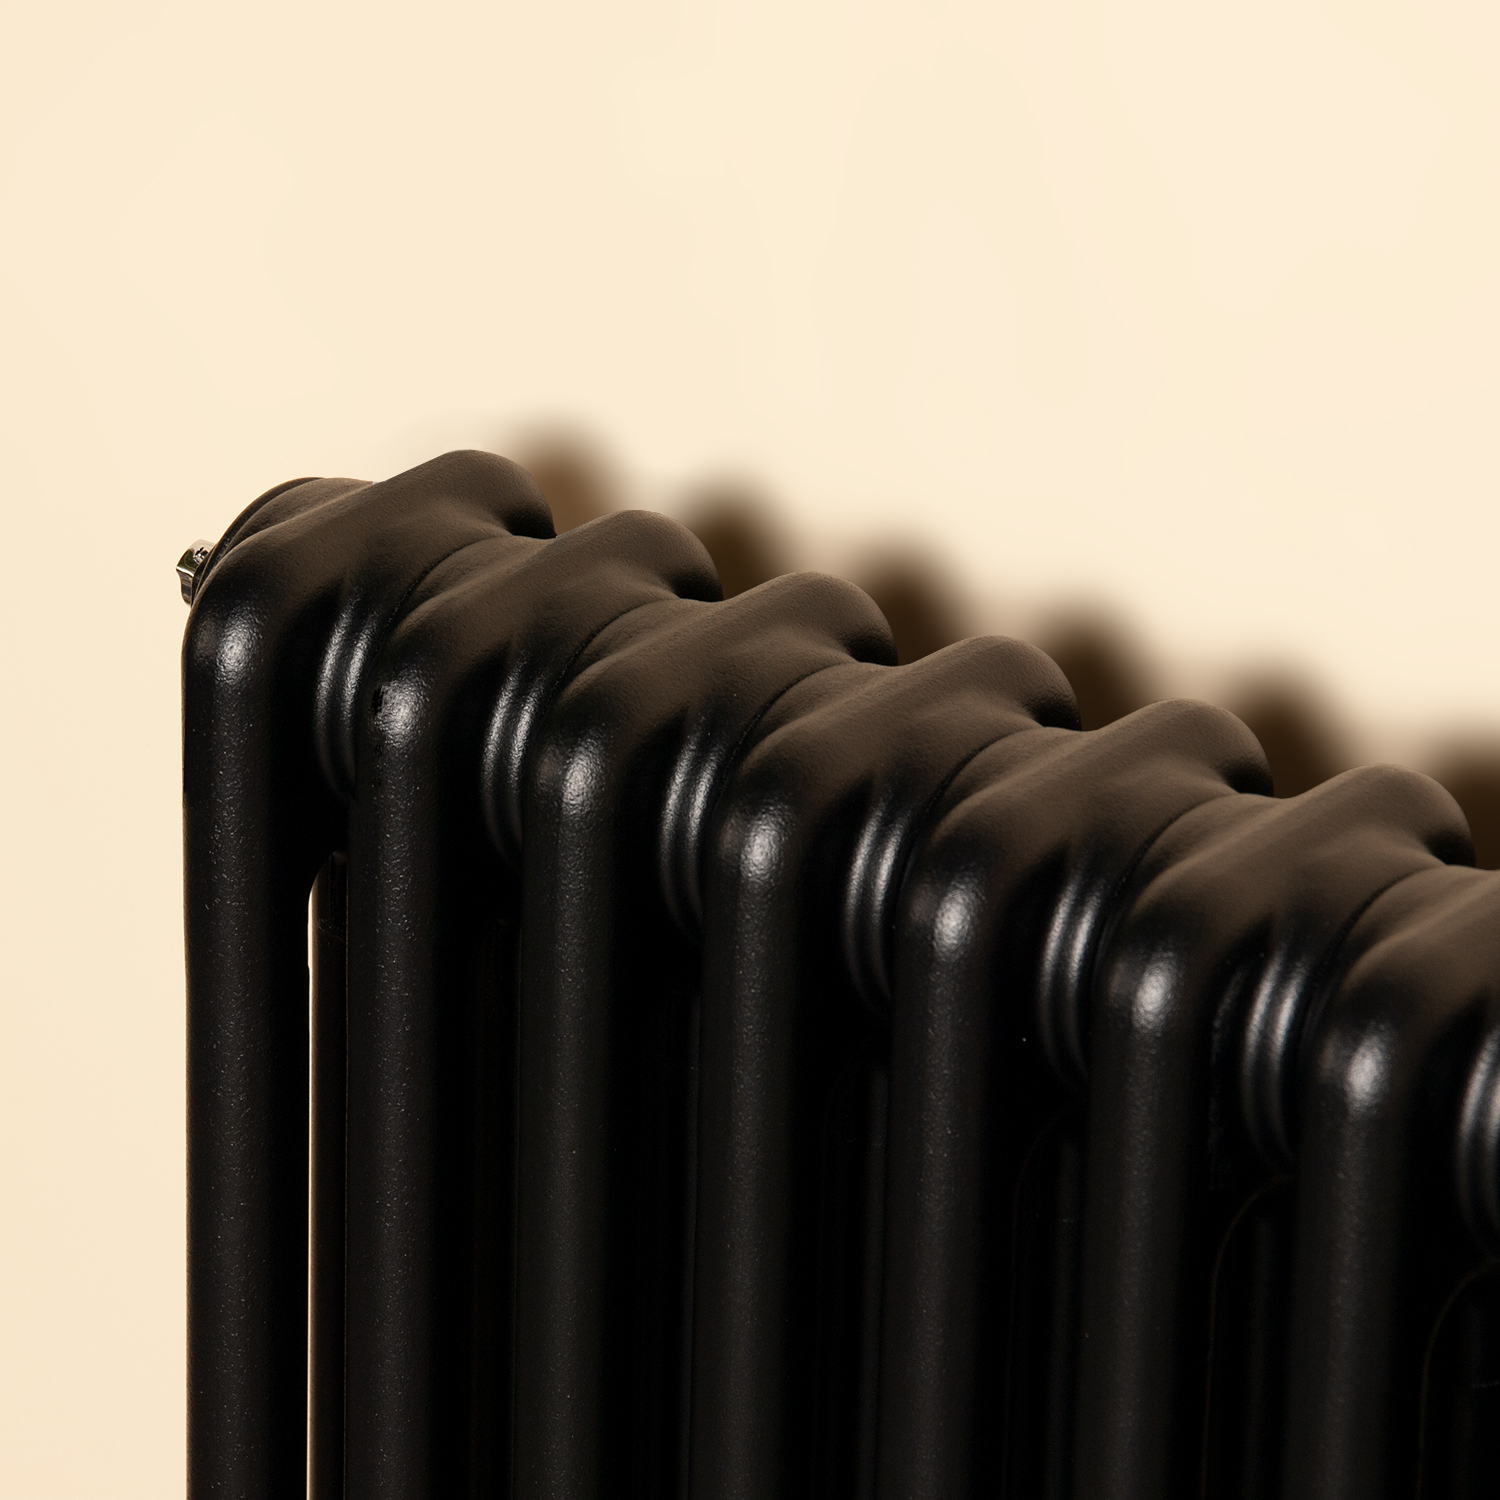 Black column radiator close up